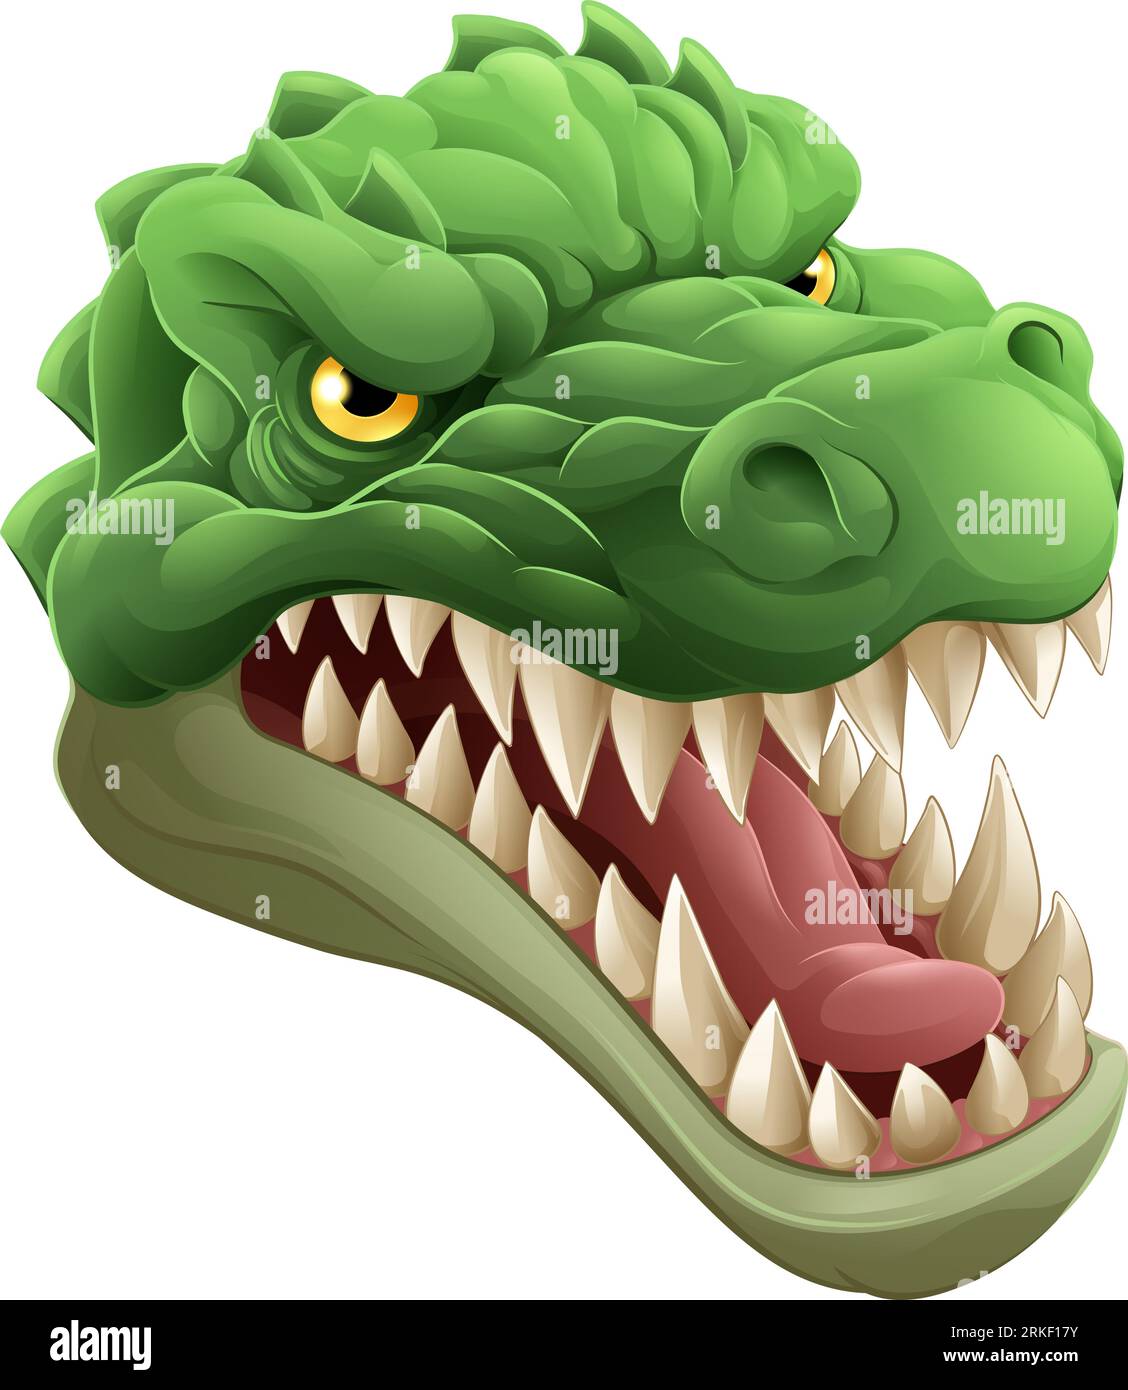 Crocodile Alligator Cartoon Lézard Dino Monster Illustration de Vecteur